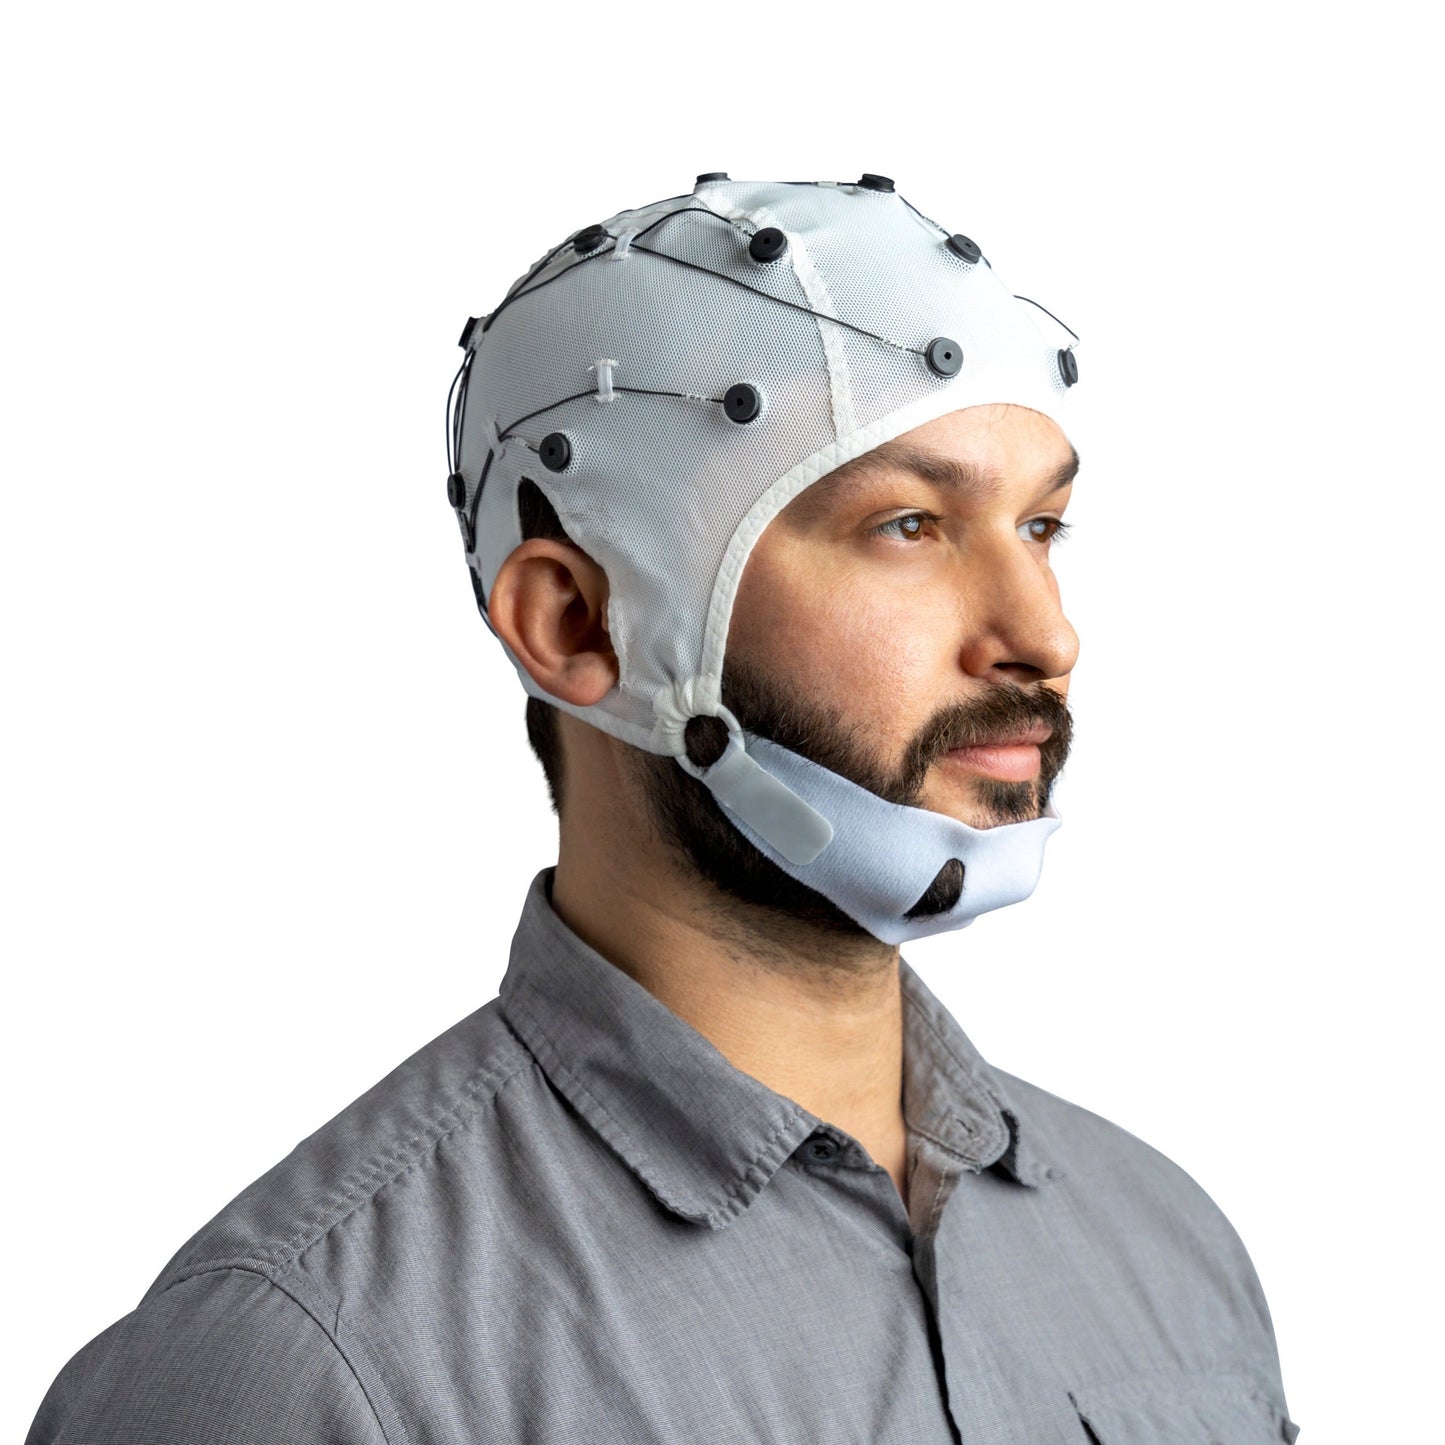 [All-in-One EEG Electrode Cap Starter Kit]